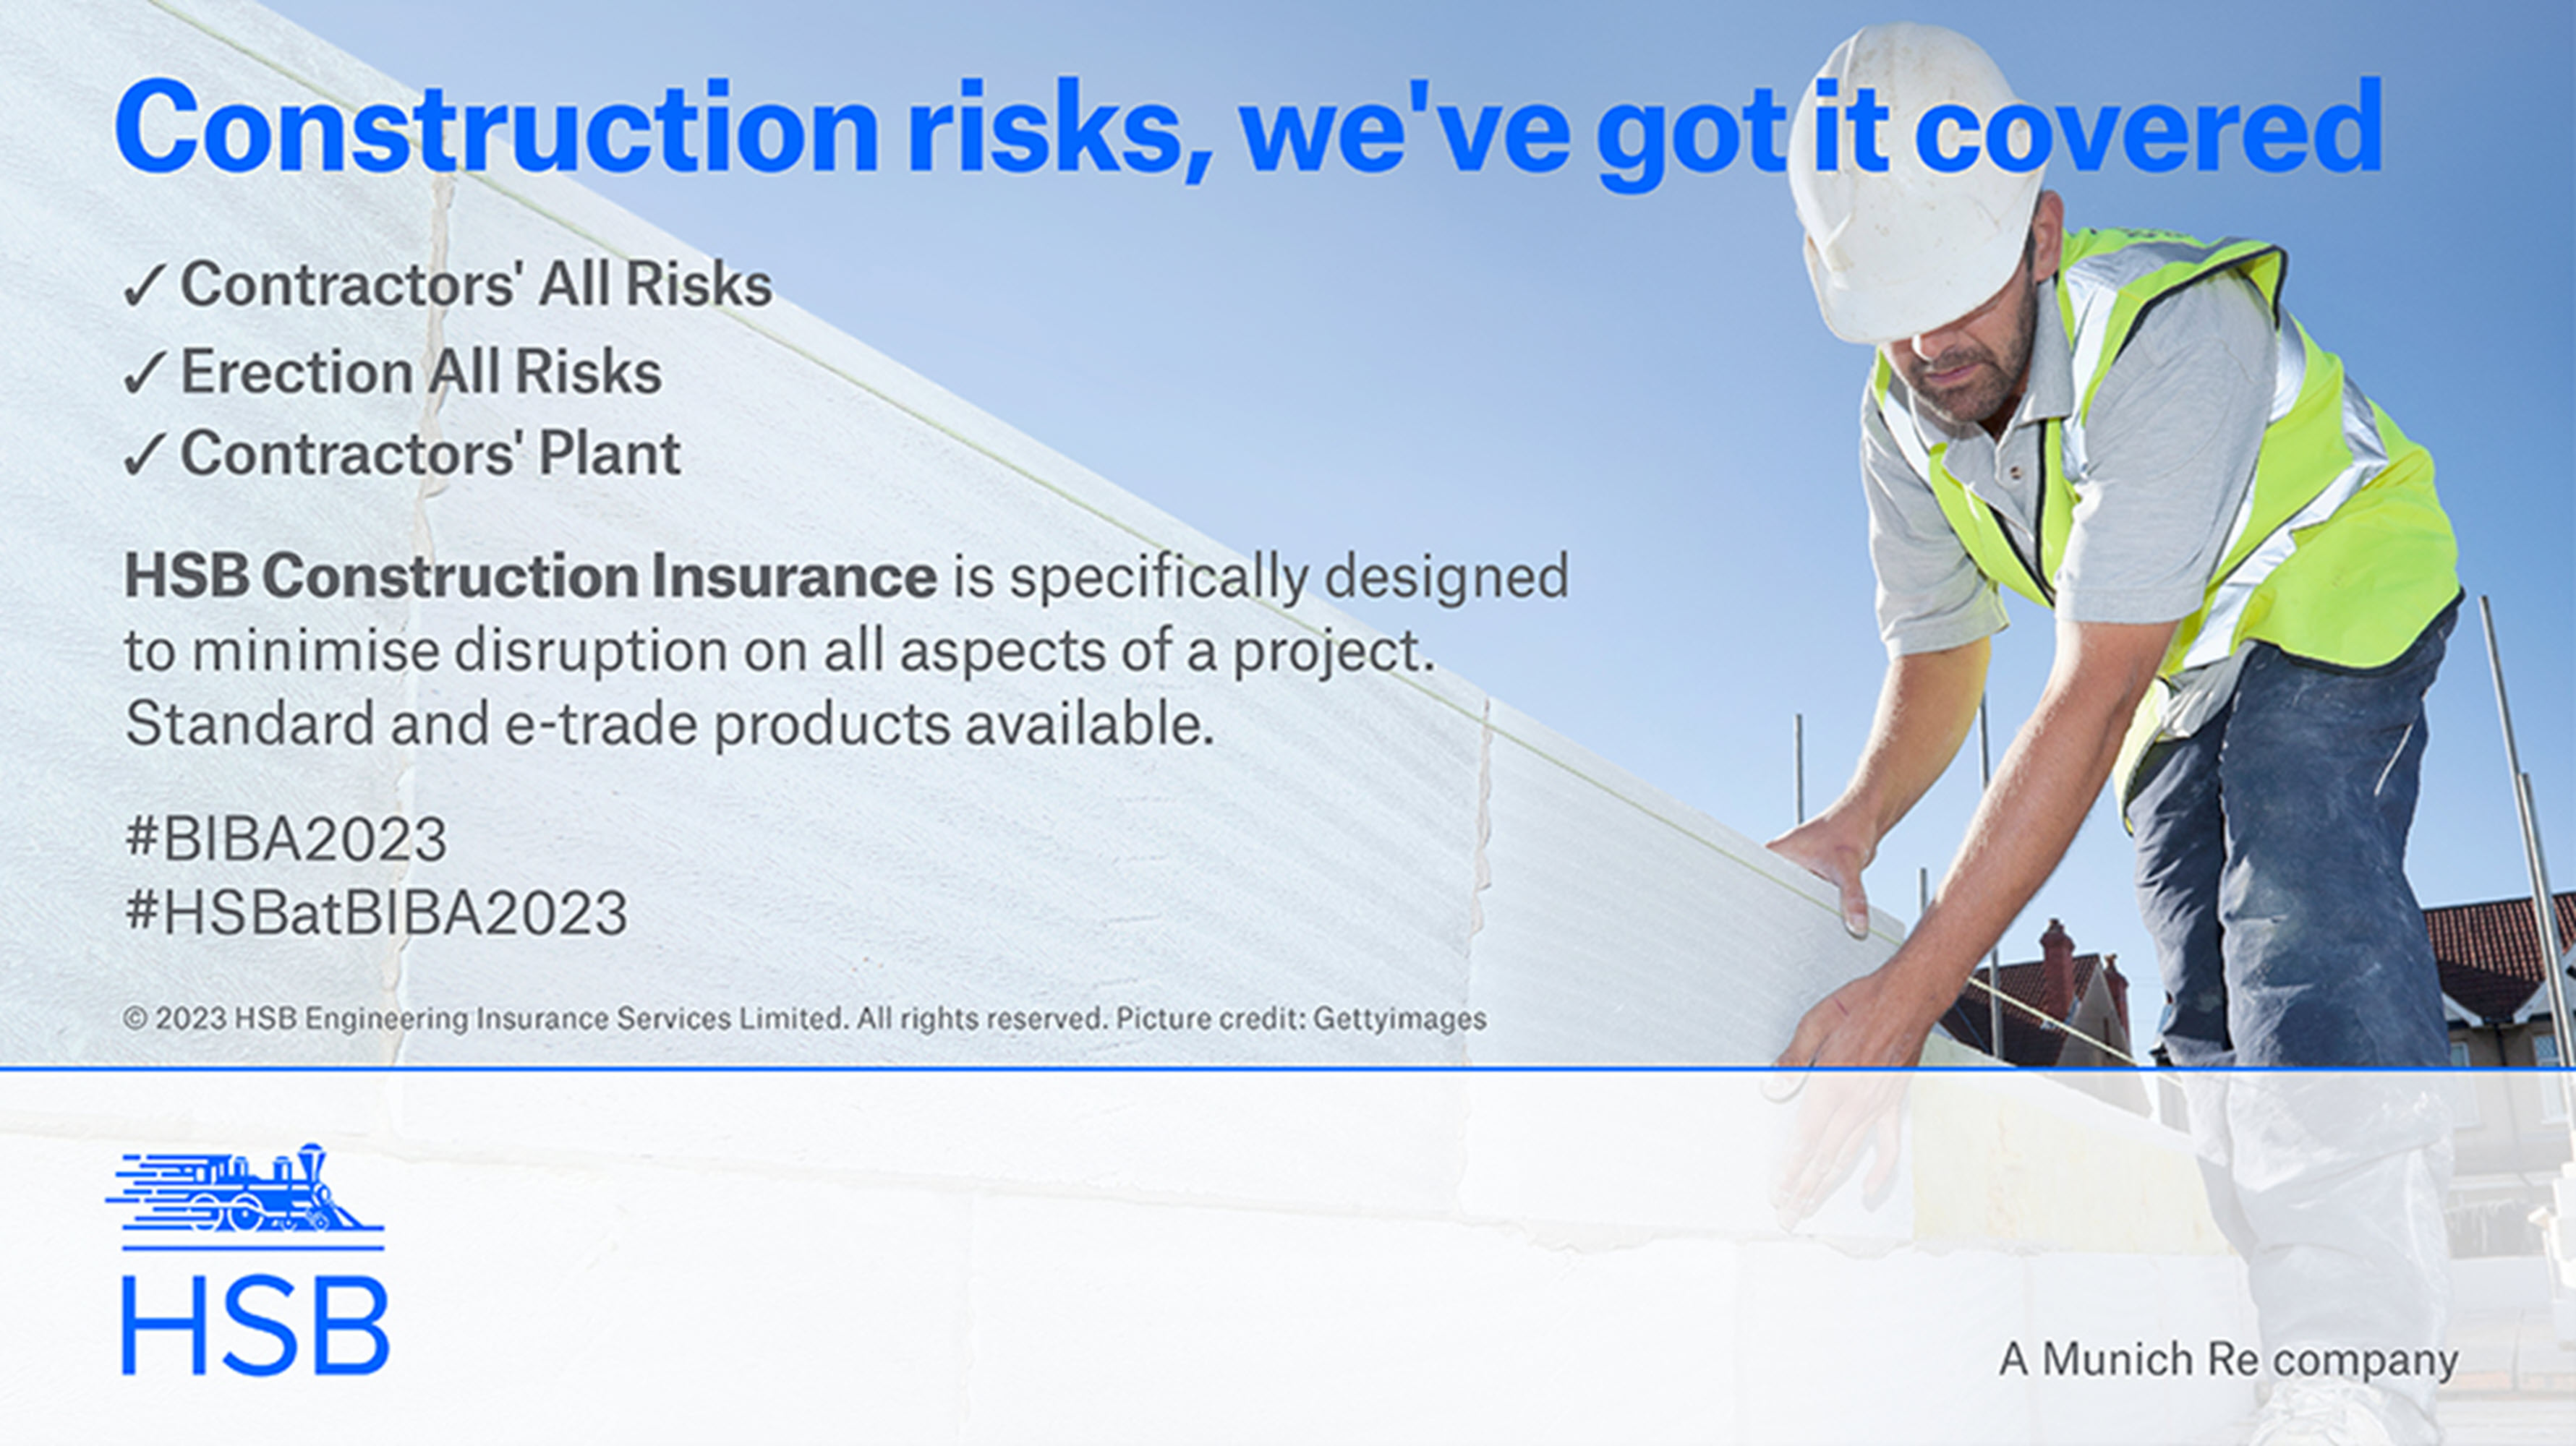 HSB Construction Insurance